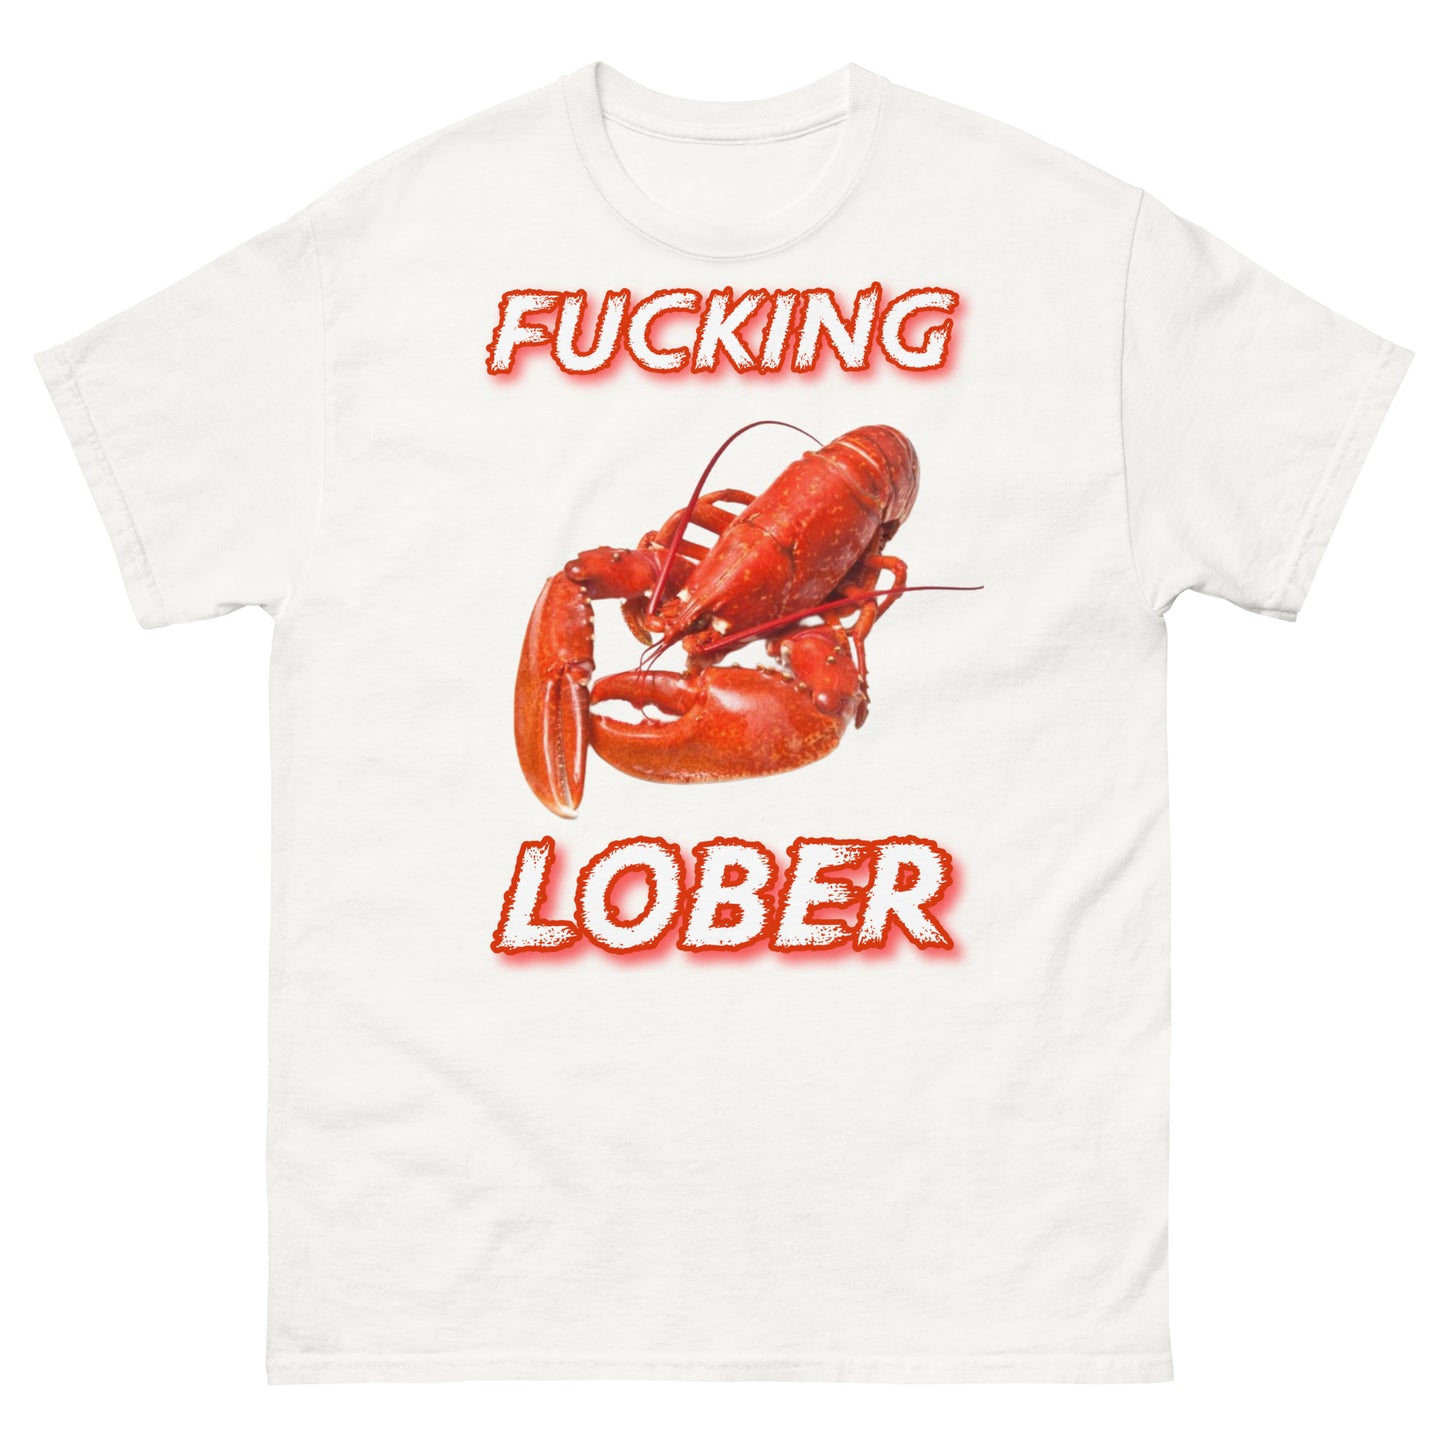 Lober / Lobster Cringey Tee